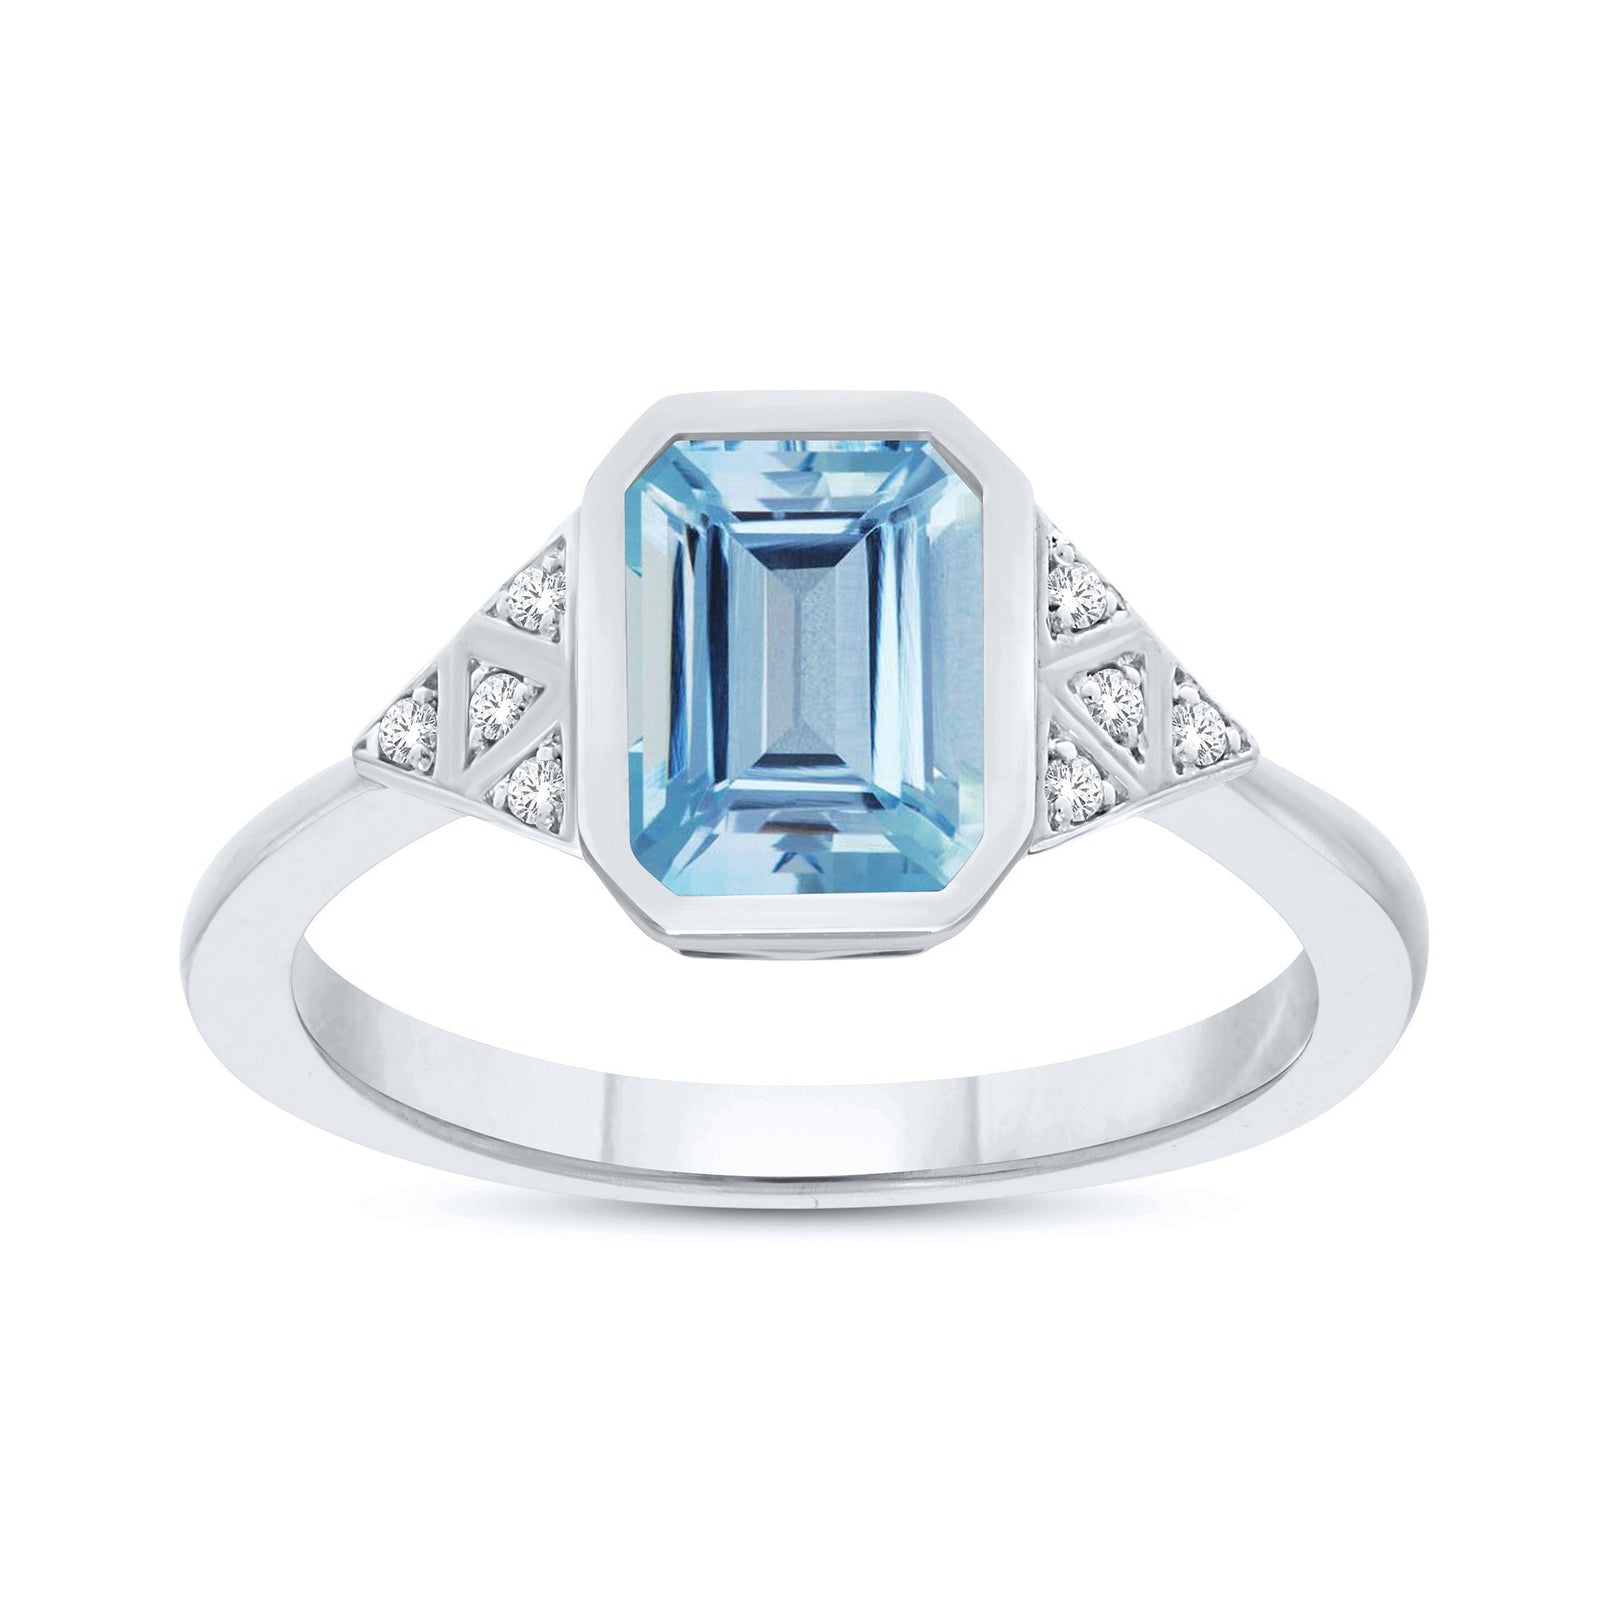 9ct white gold 9x7mm octagon cut rubover set blue topaz & diamond ring 0.05ct